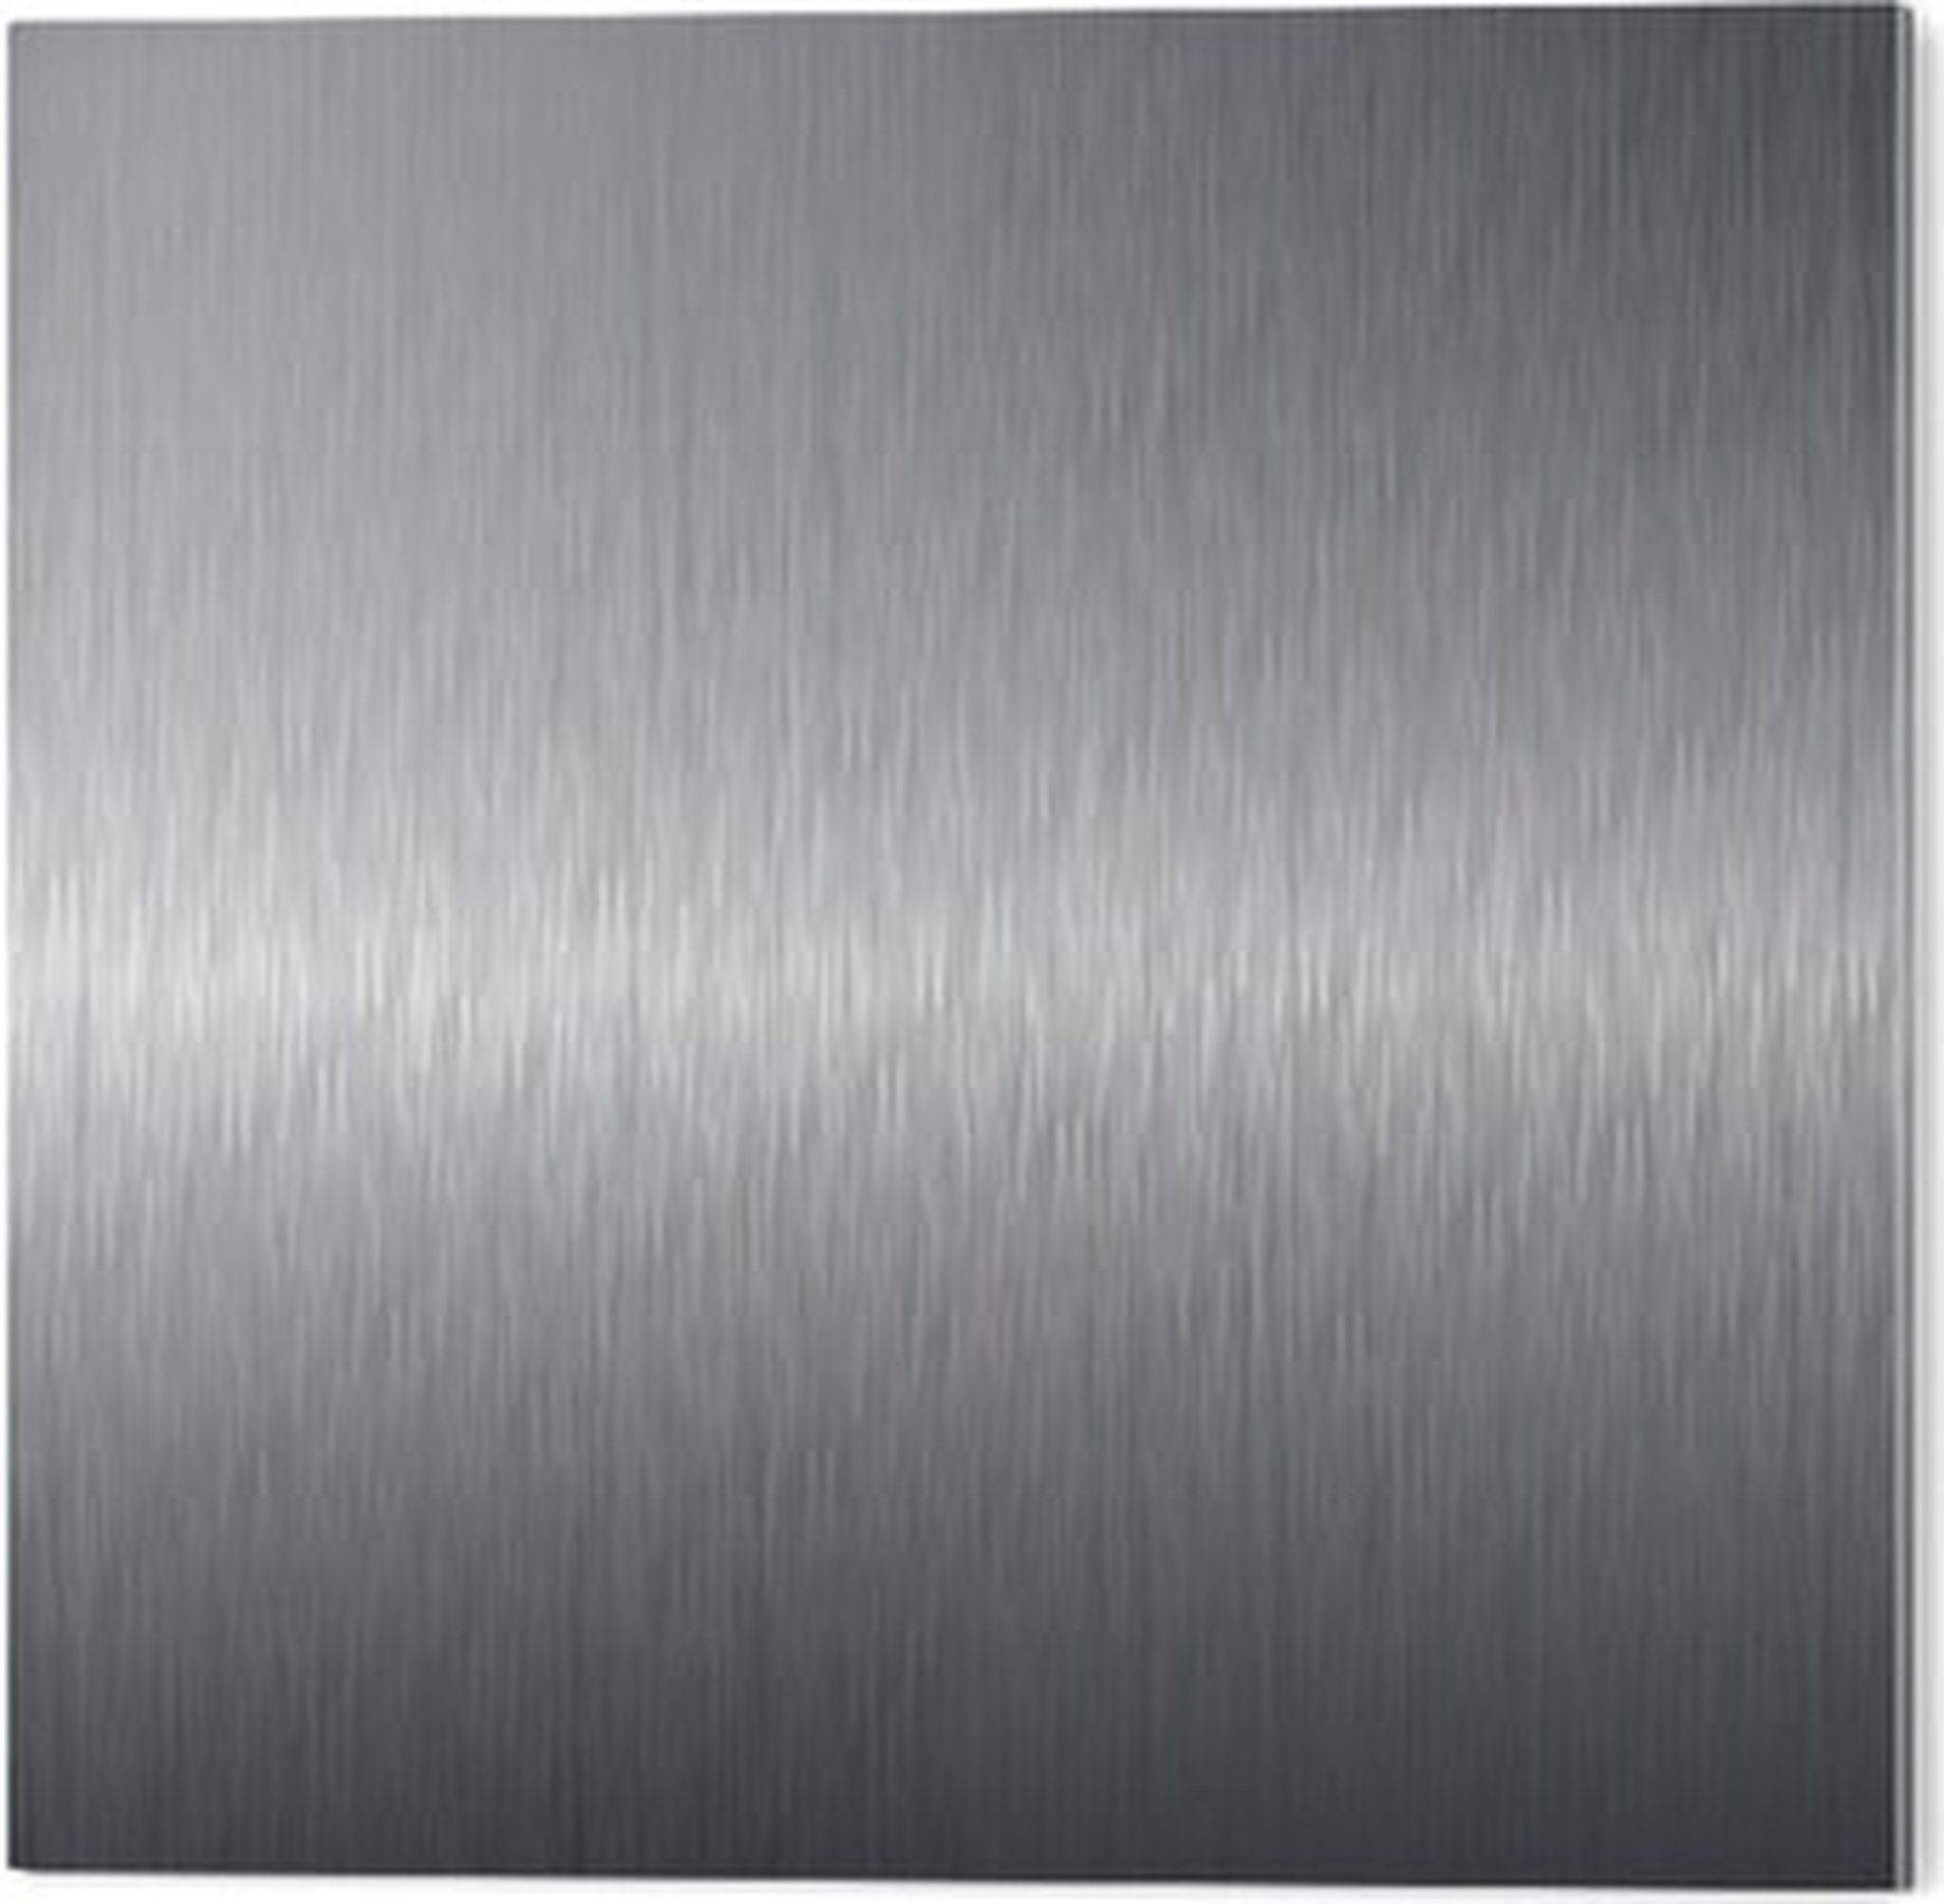 Tizo Designs Home Tizo Design Clear Lucite Tray with Modern Silver Handles